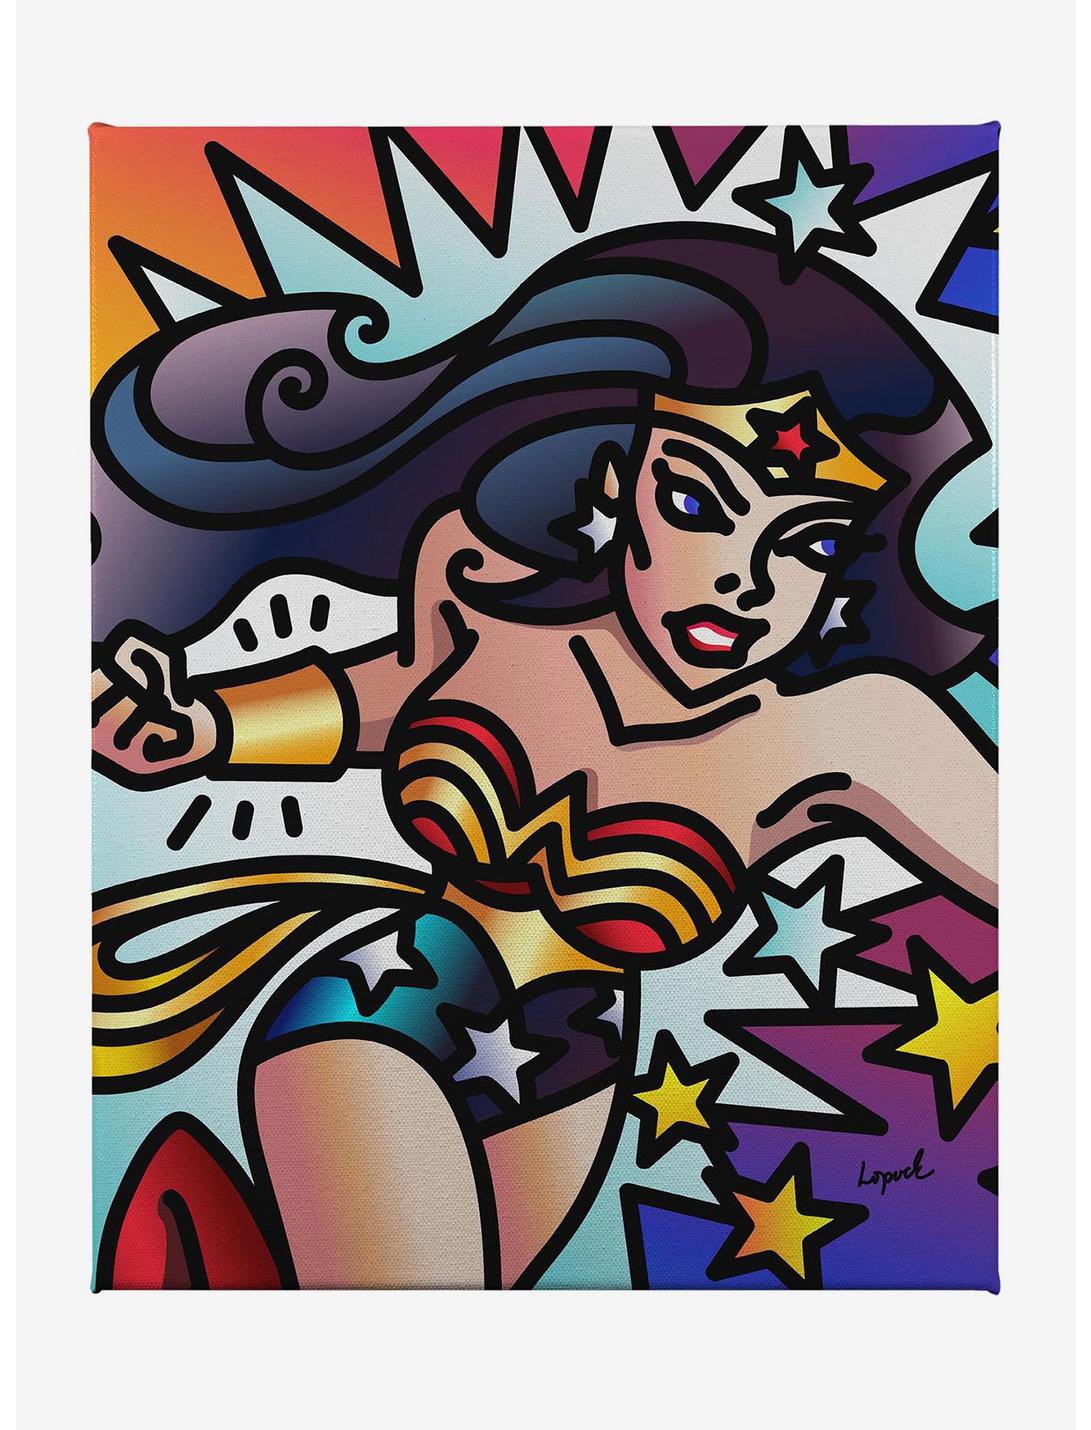 DC Comics Wonder Woman Gallery Wrapped Canvas, , hi-res